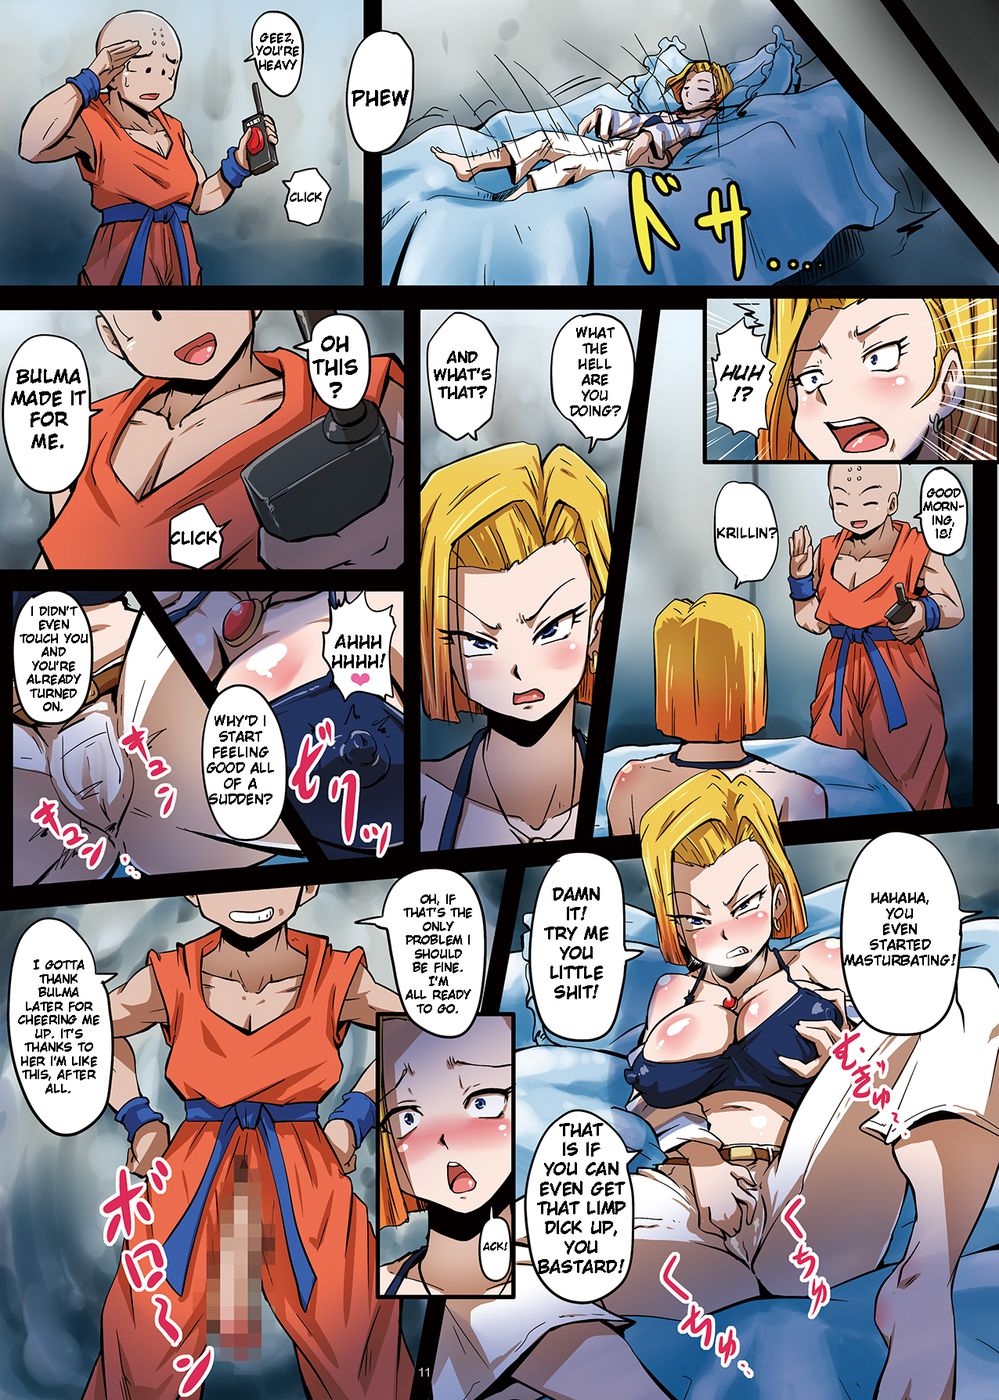 Hentai Manga Comic-The Plan to Subjugate 18 -Bulma and Krillin's Conspiracy to Turn 18 Into a Sex Slave-Read-12